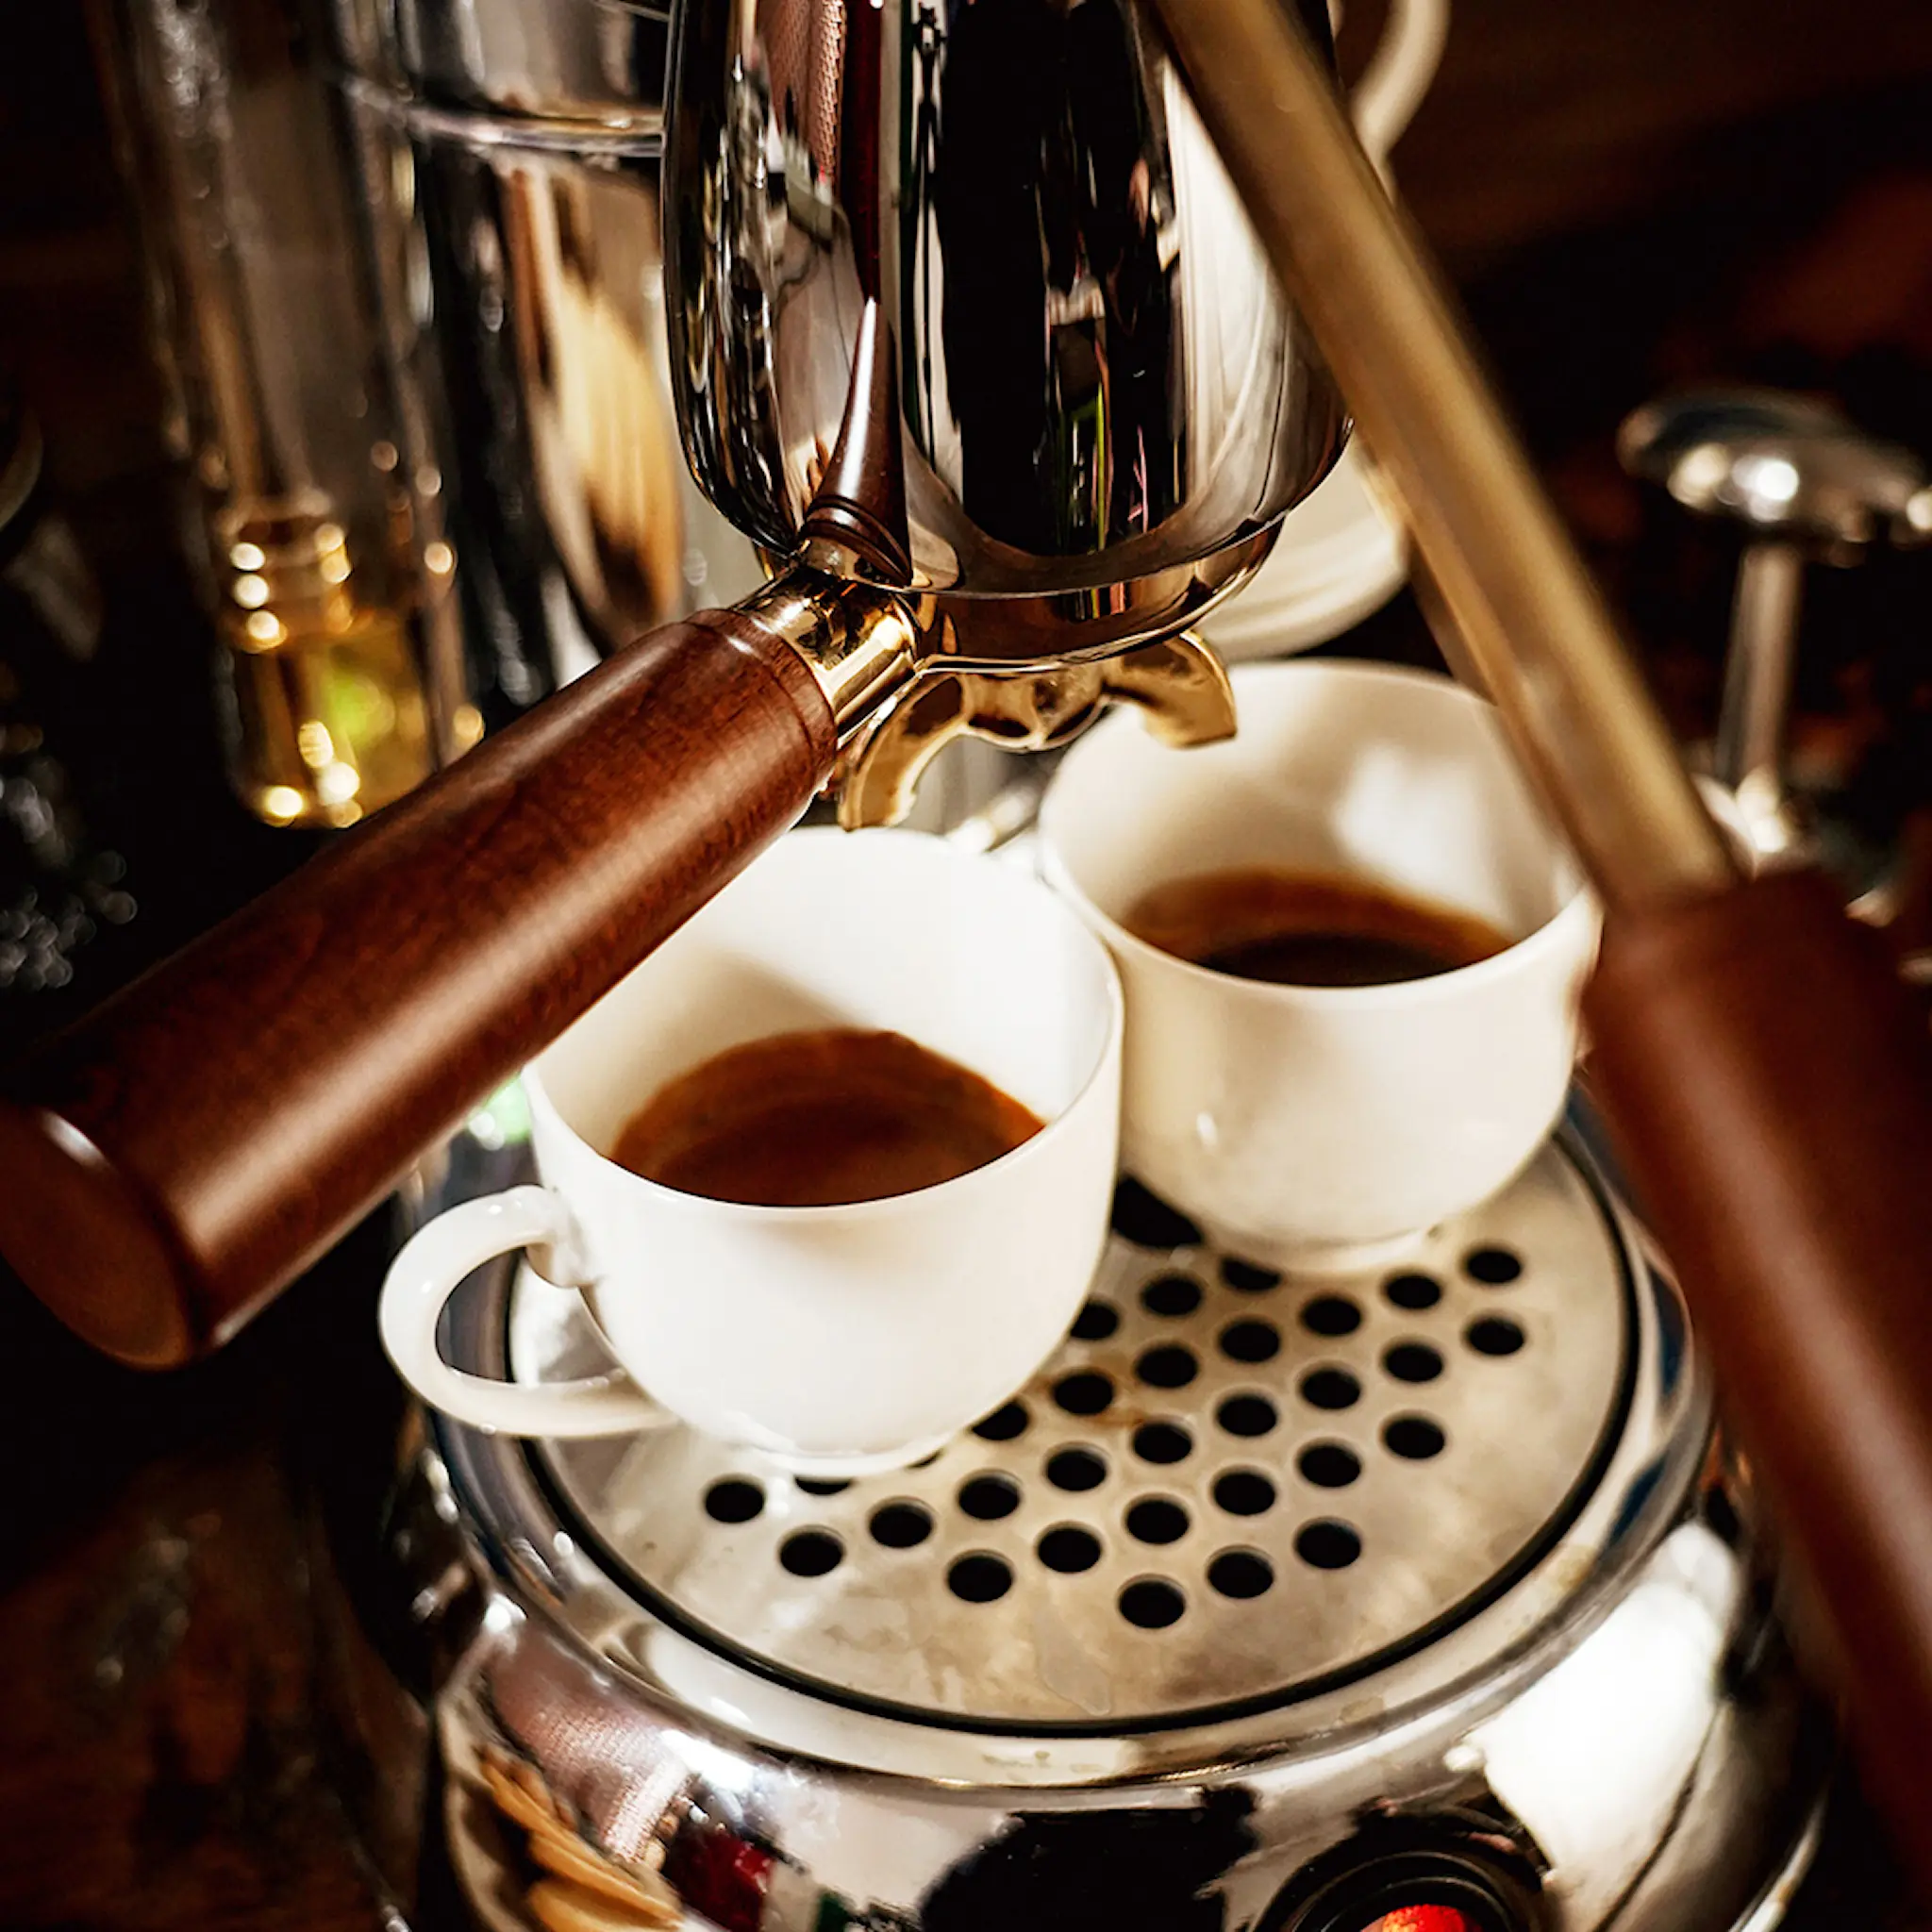 La Pavoni Esperto manuell kaffemaskin m hevearm 950W rustfri